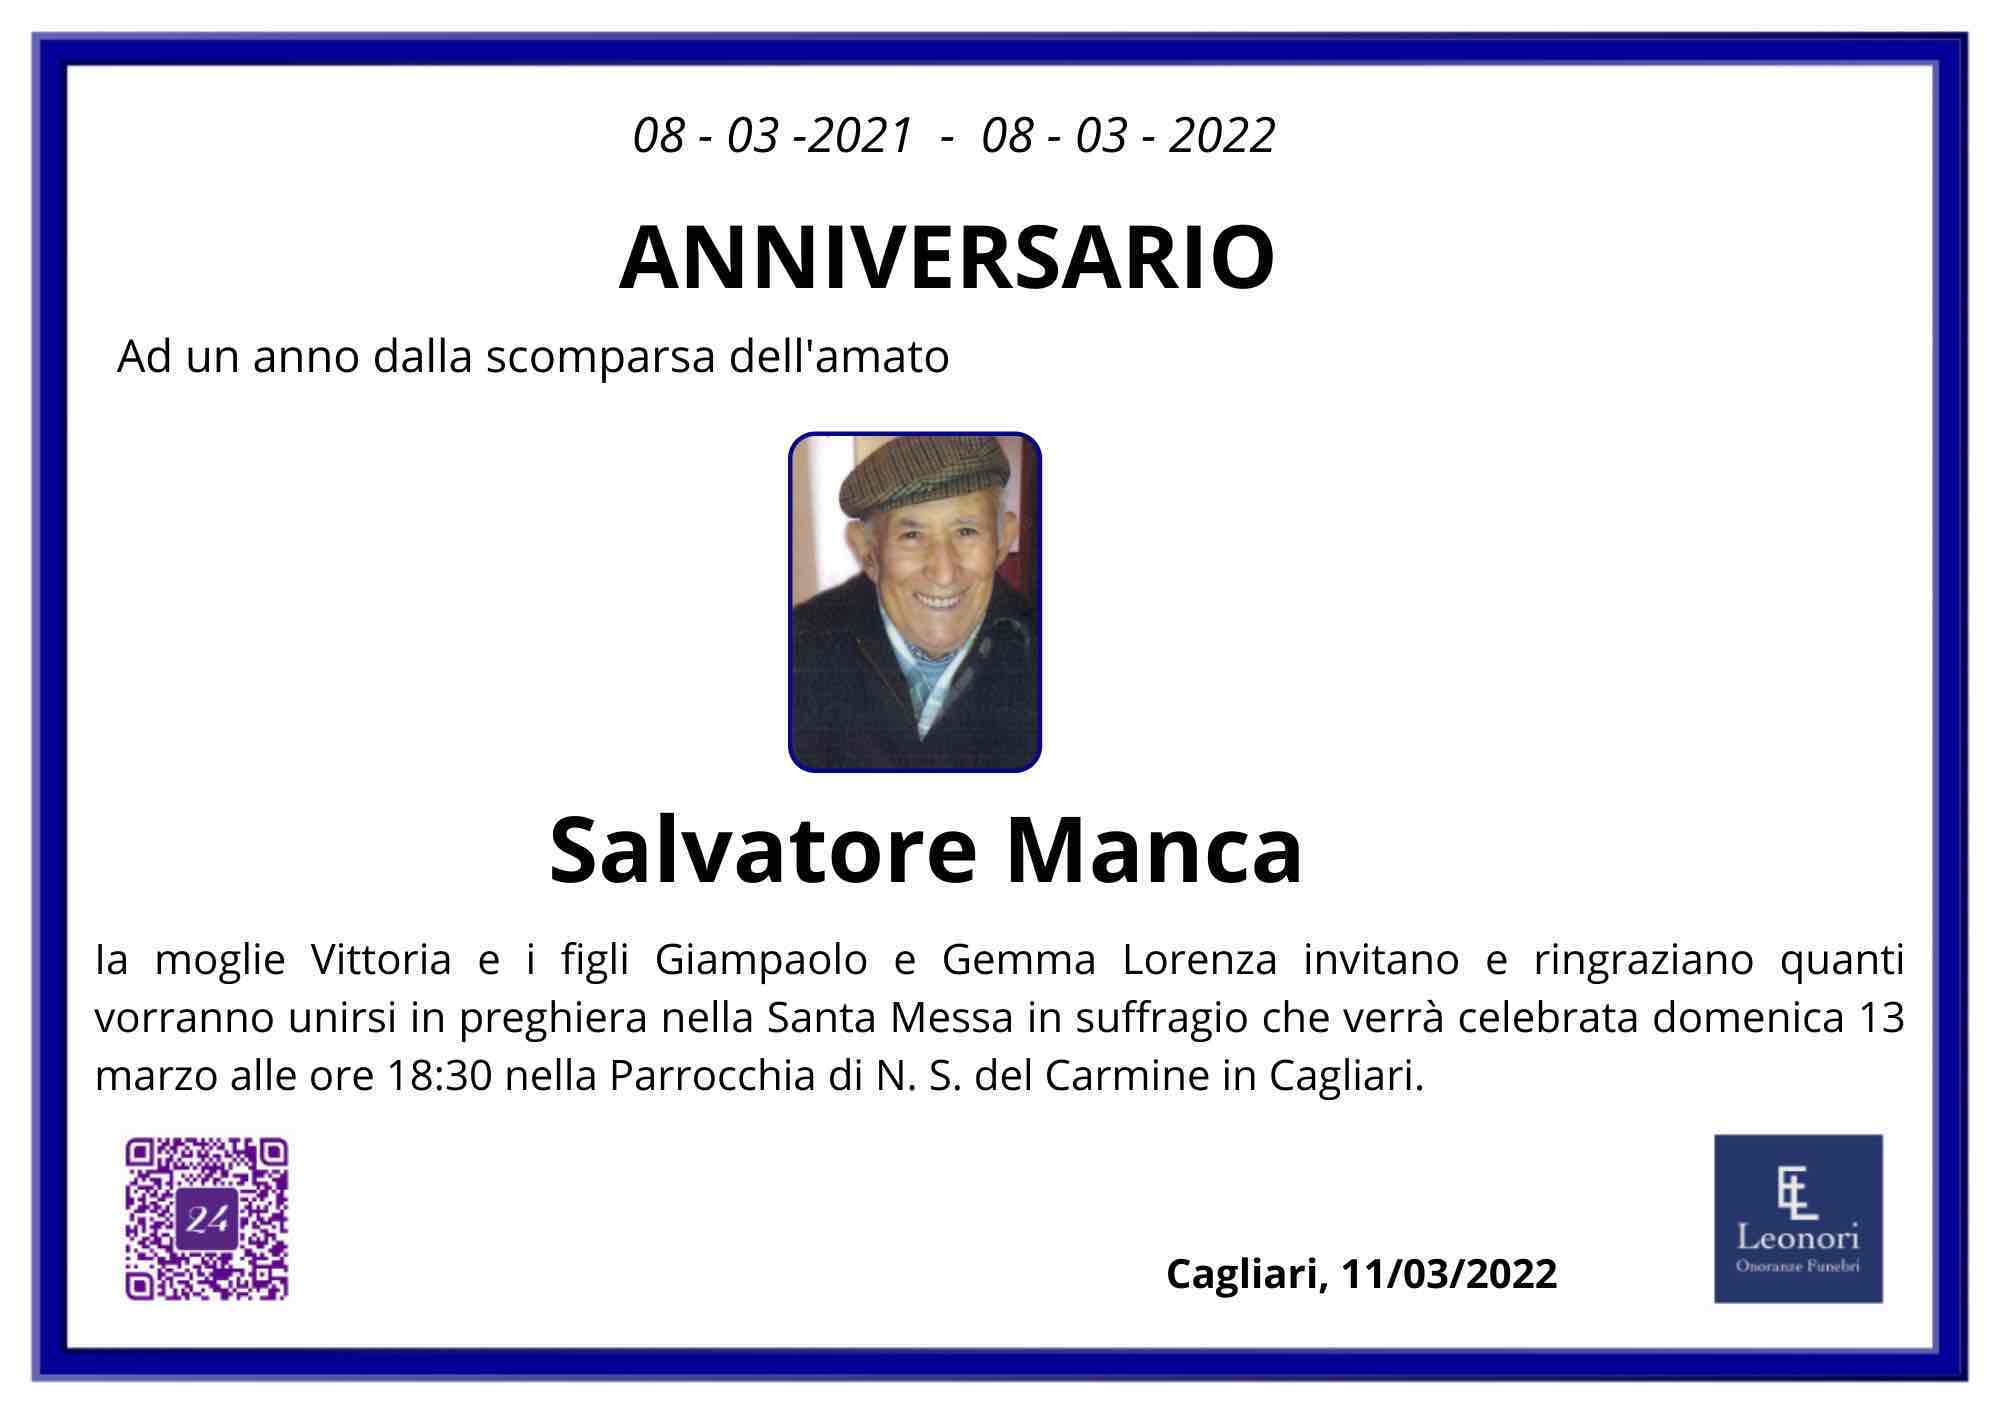 Salvatore Manca